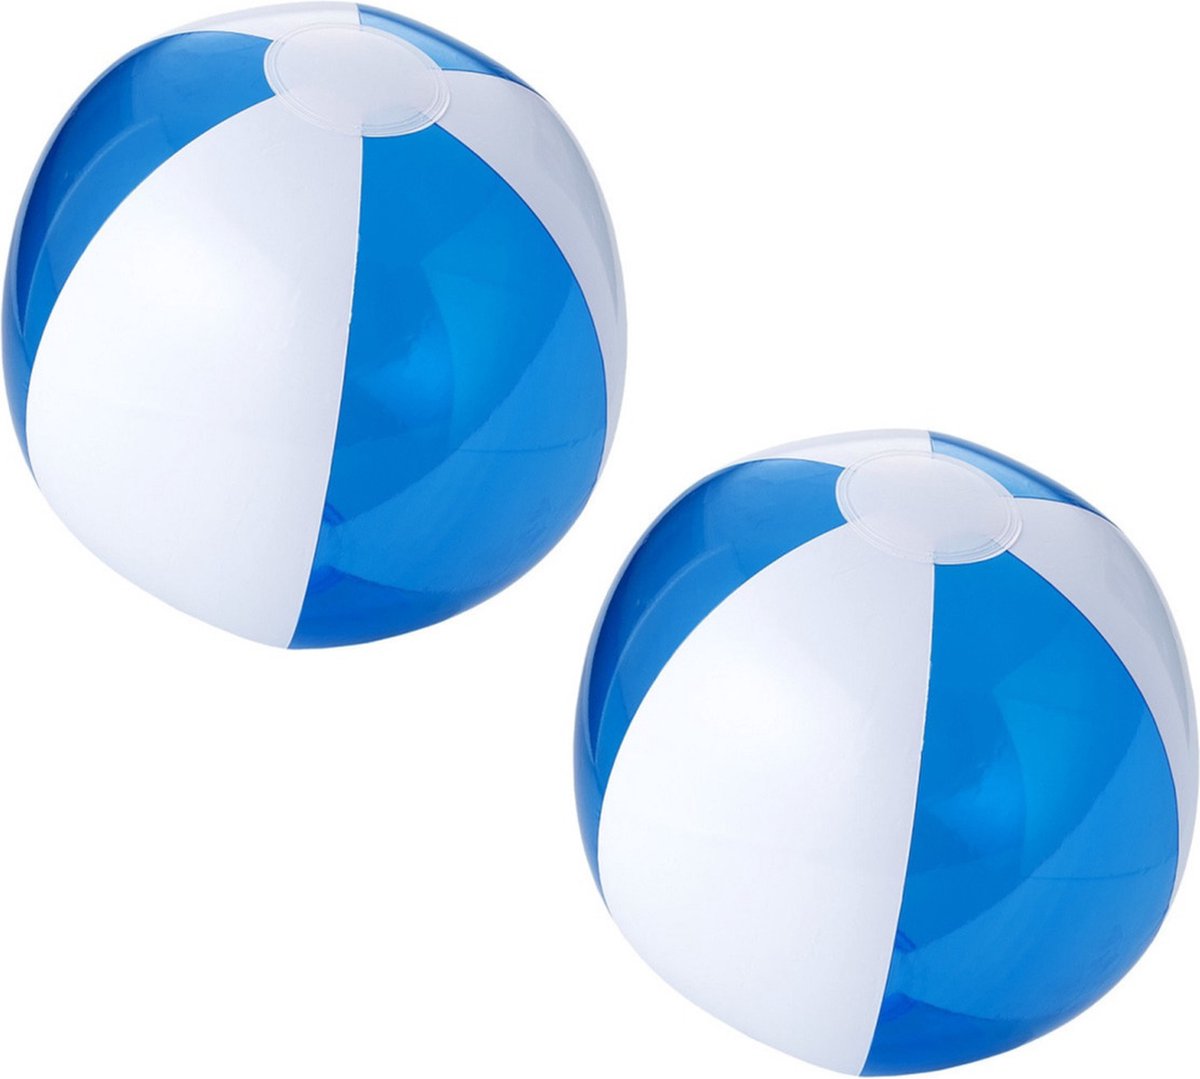 10x stuks opblaasbare strandballen blauw/wit 30 cm - Buitenspeelgoed waterspeelgoed opblaasbaar